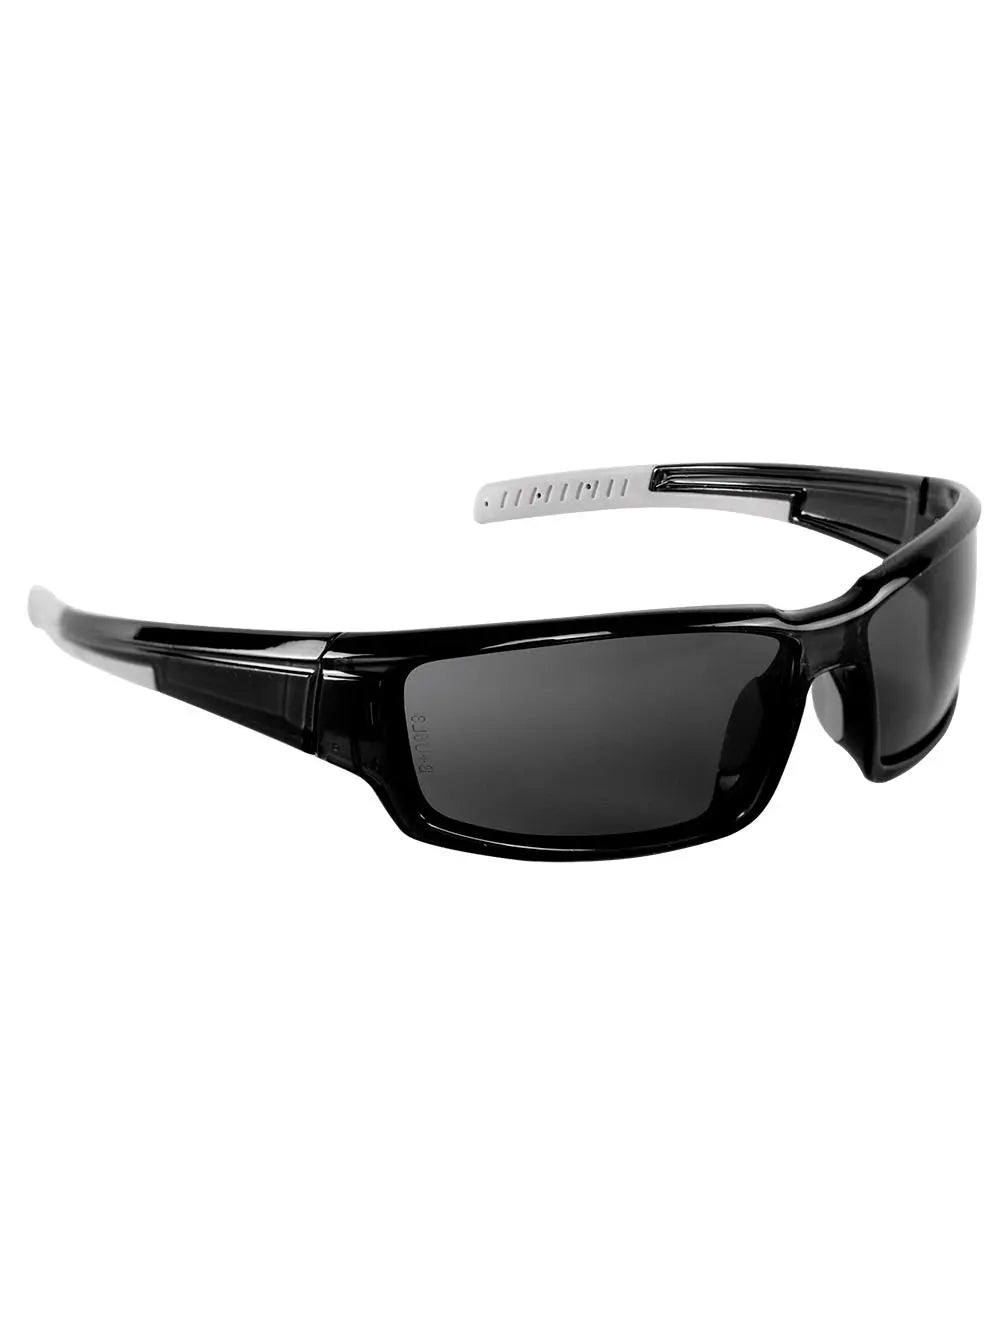 BULLHEAD SAFETY - Gafas de seguridad antivaho Maki, humo/negro cristal